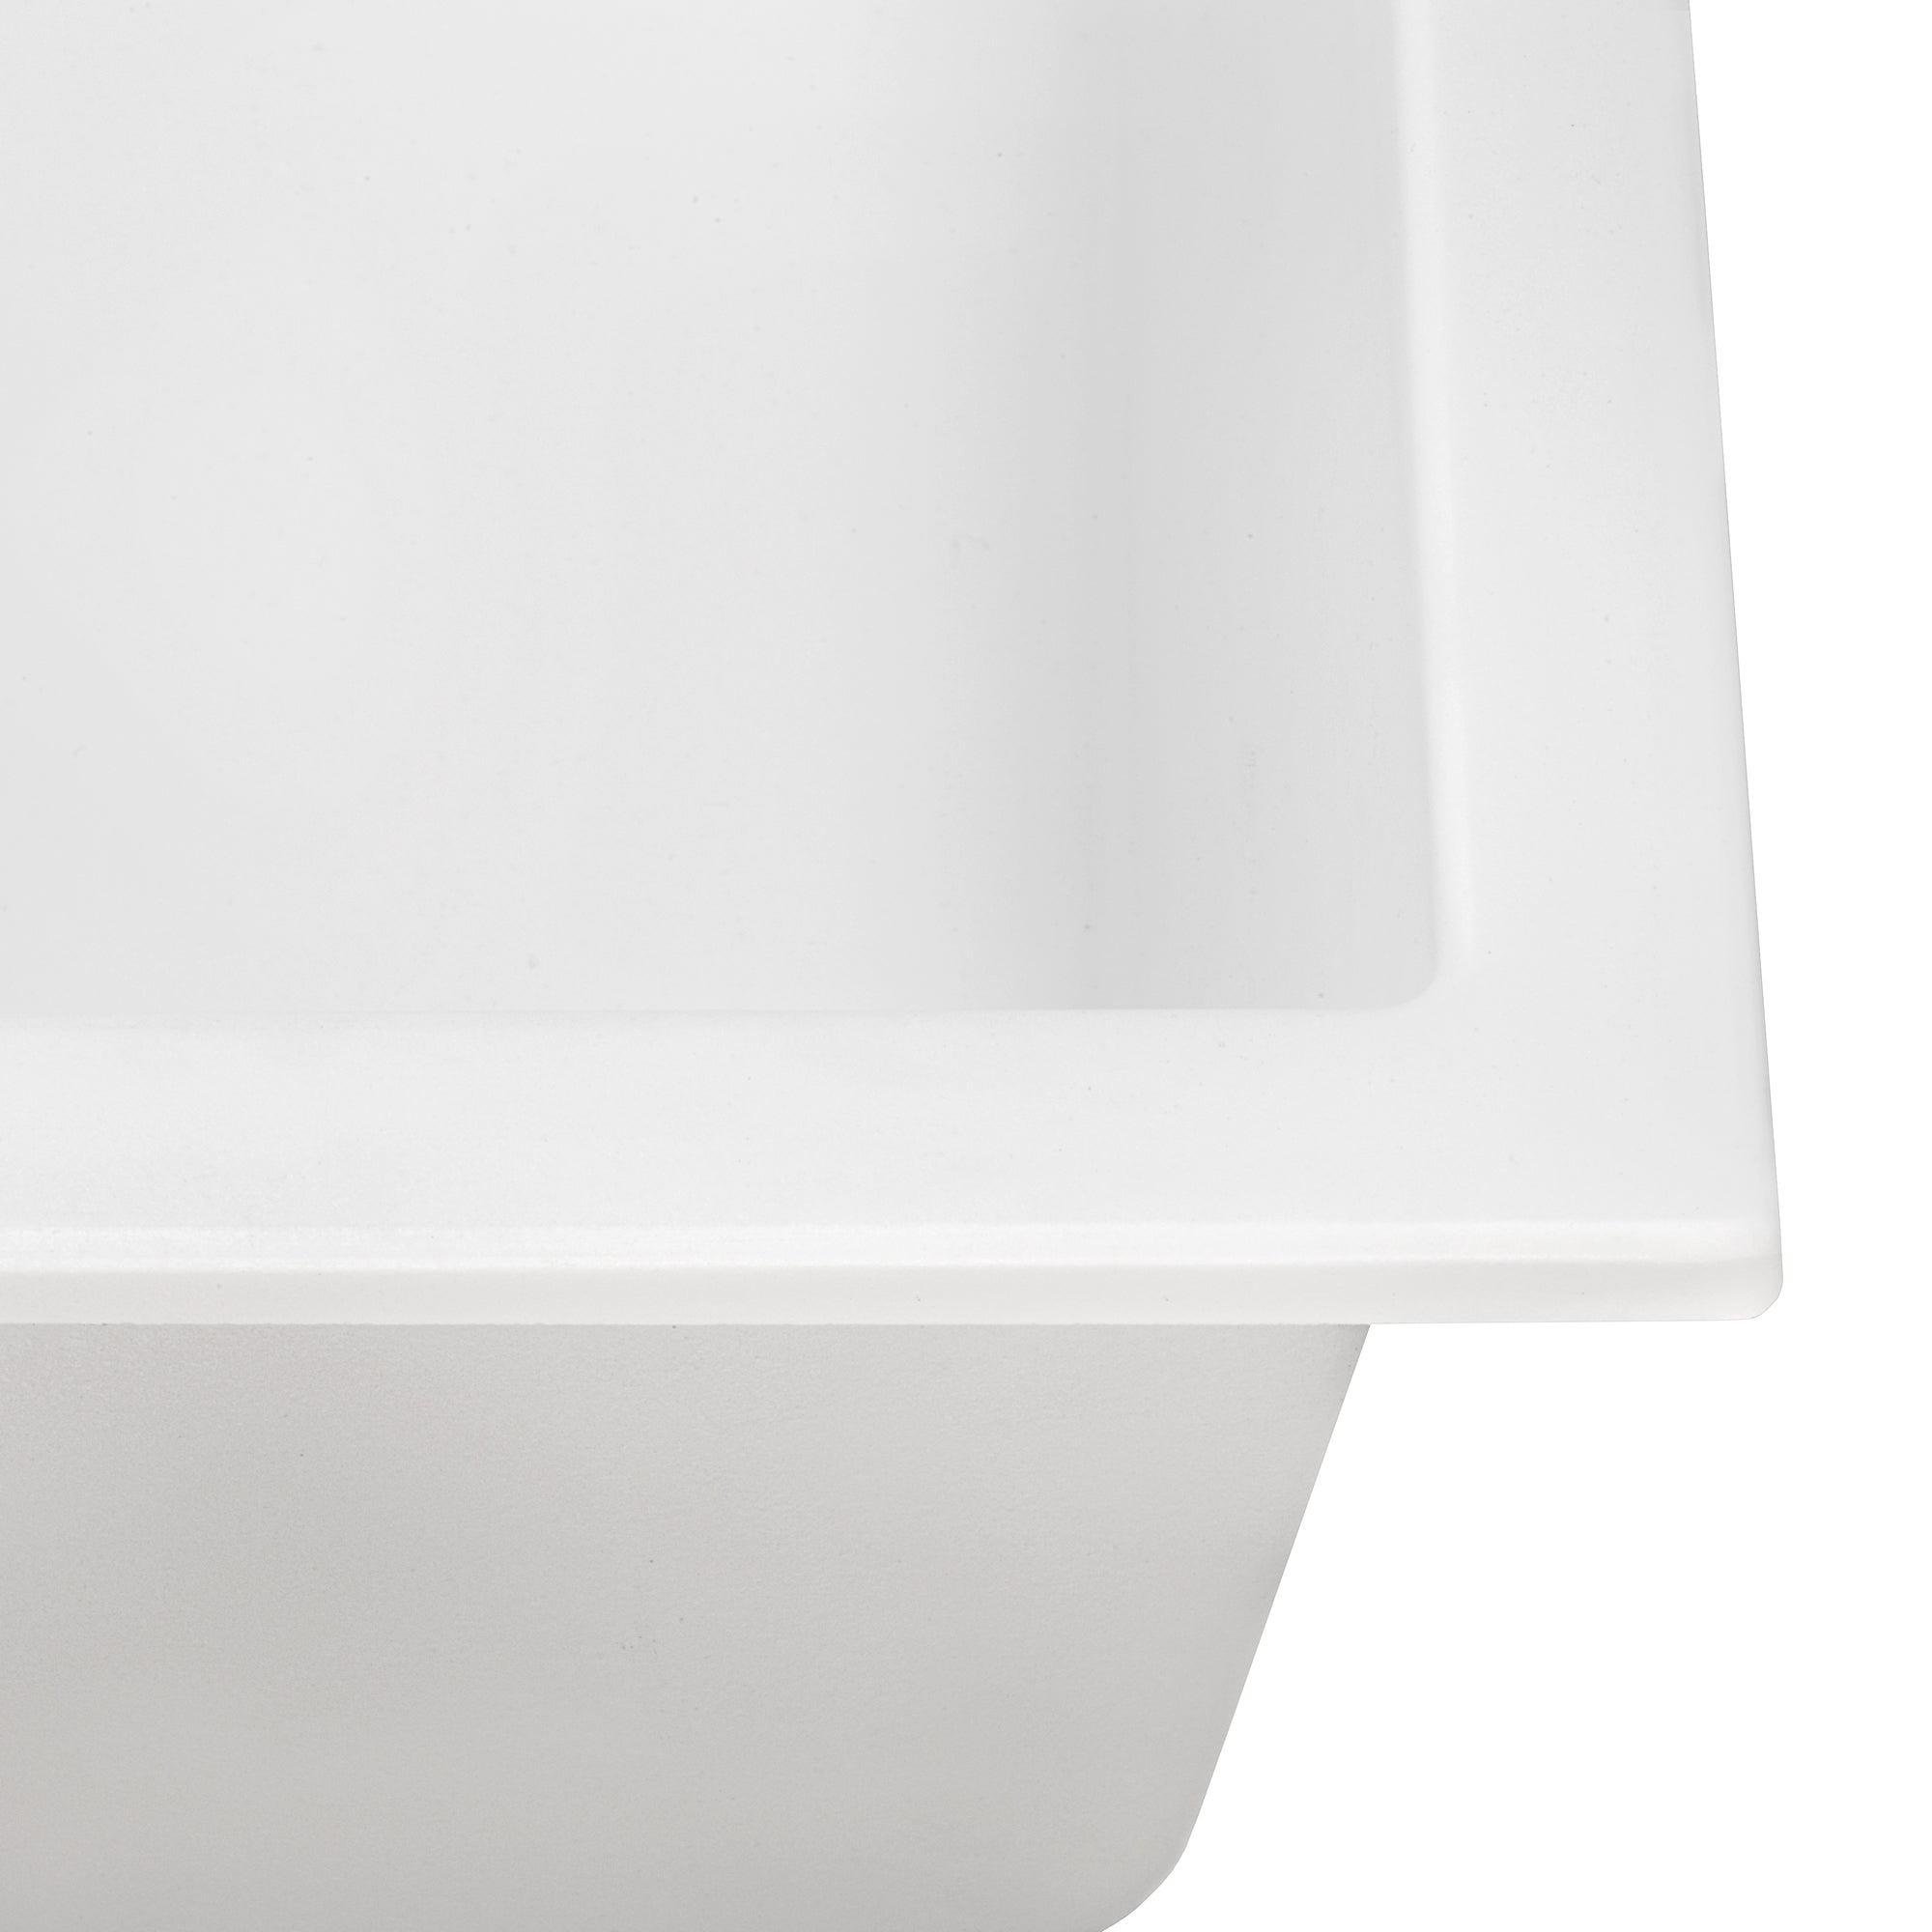 Ruvati 23 x 20" epiGranite Dual-Mount Granite Composite Single Bowl Kitchen Sink